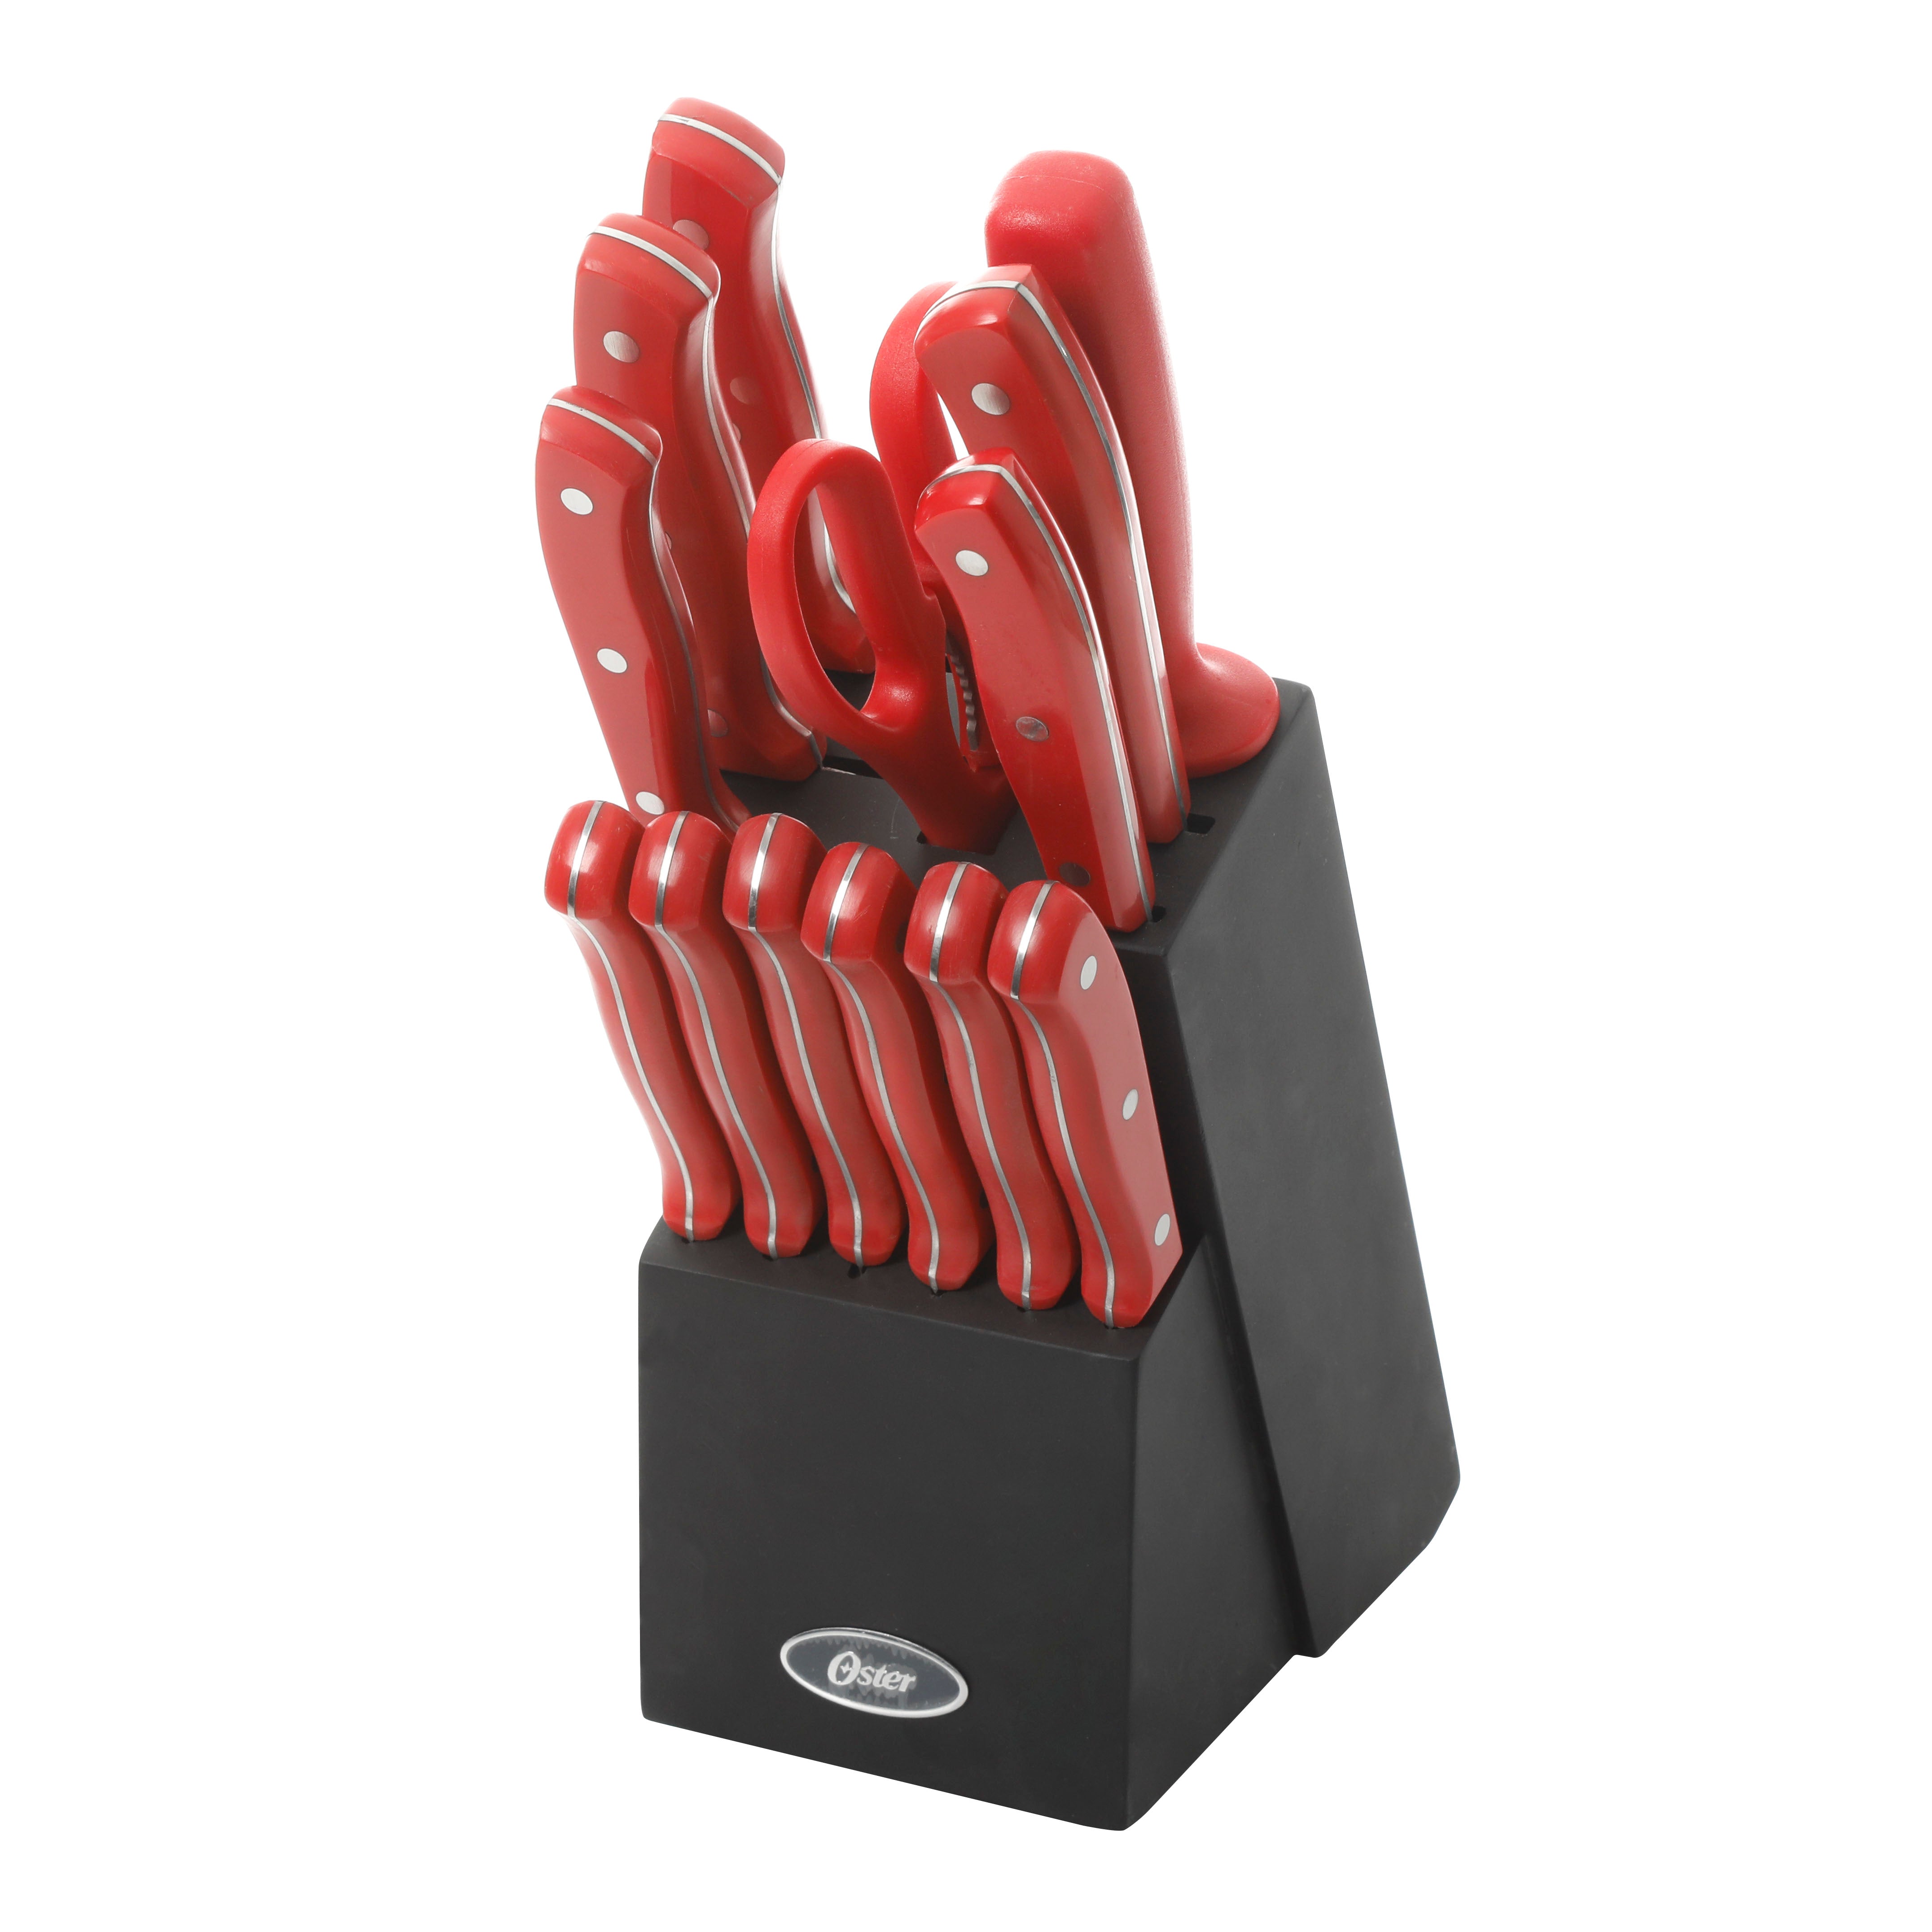 Oster 4 Piece Ceramic Cutlery Set Red - Shop Flatware at H-E-B